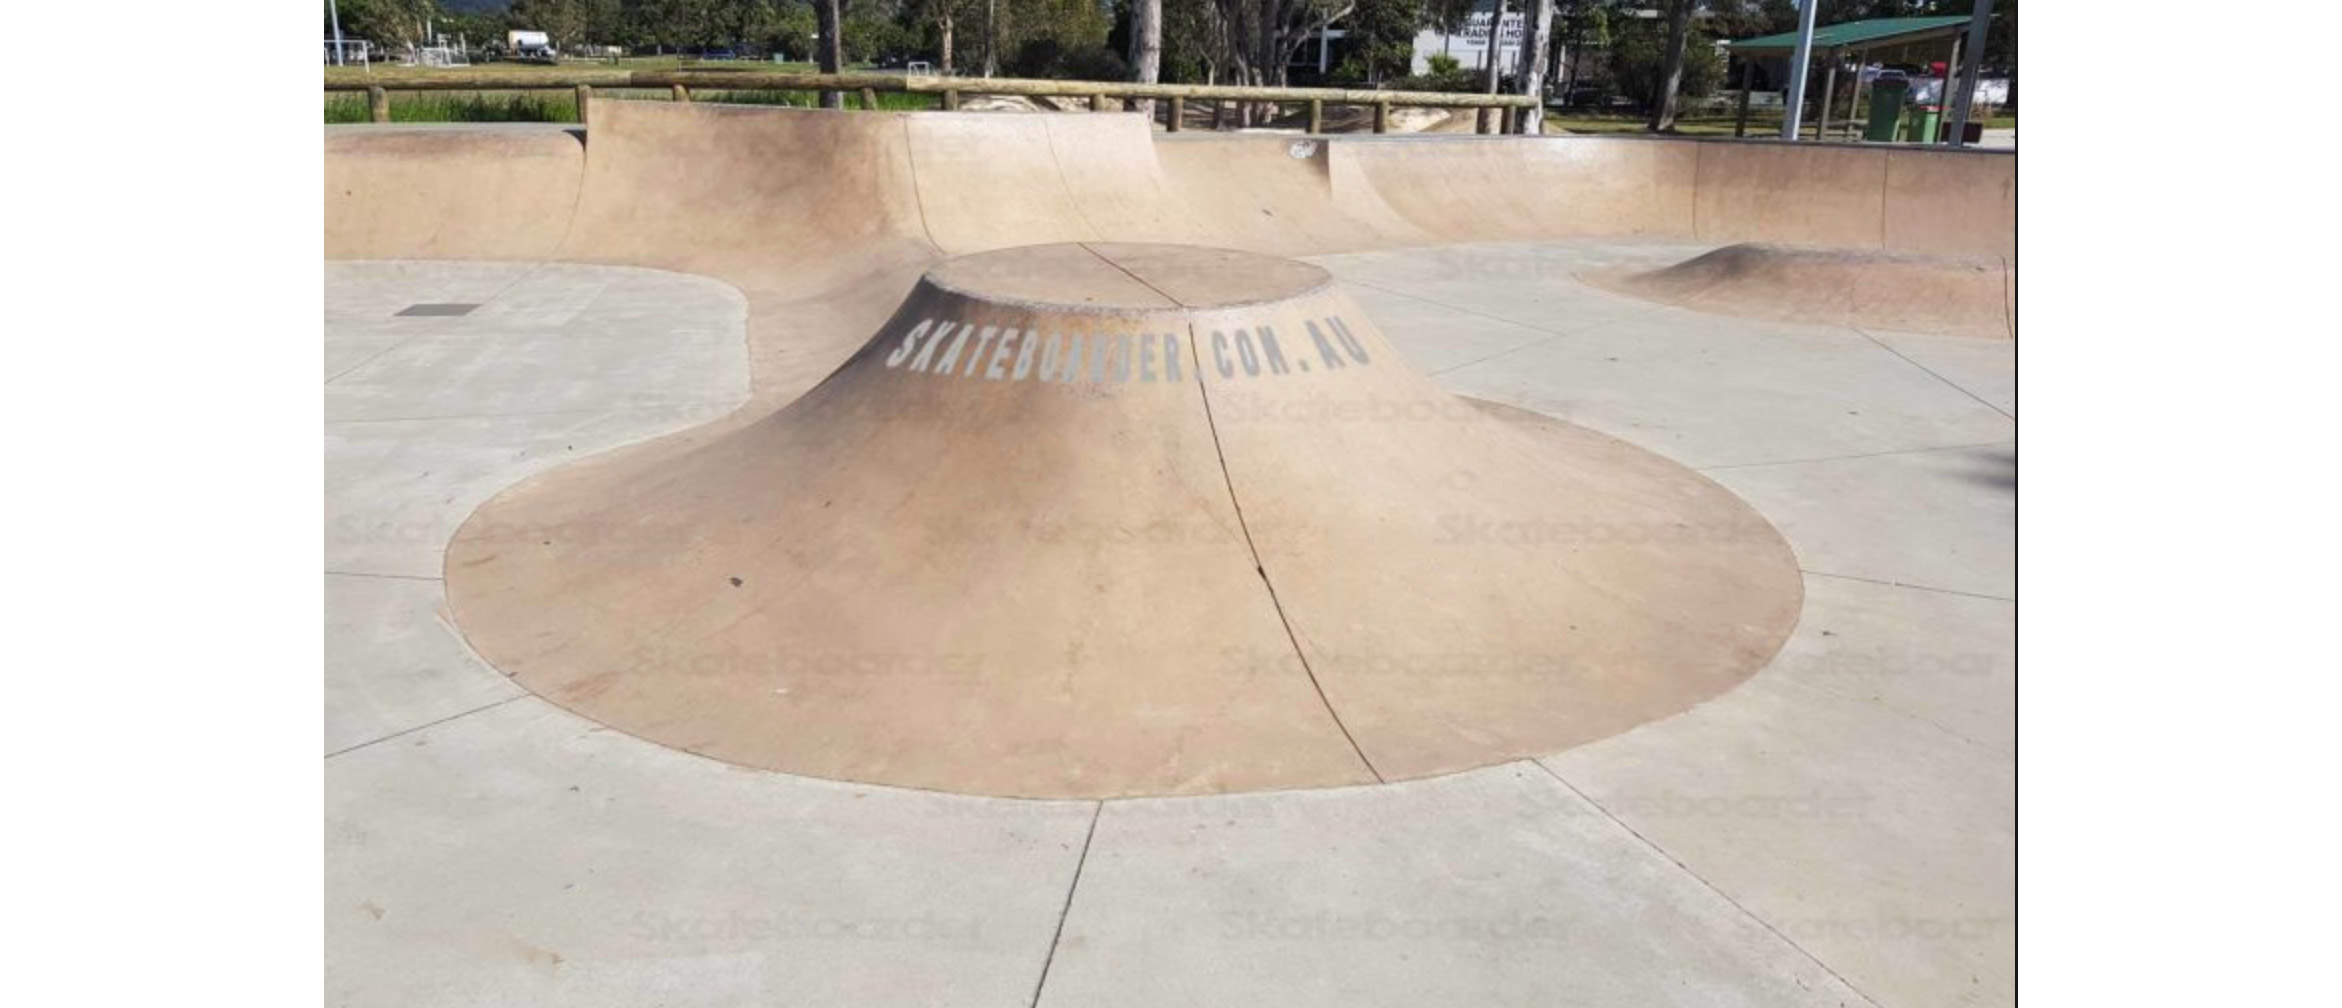 Ormeau skate park transition section, Concrete Skateparks build